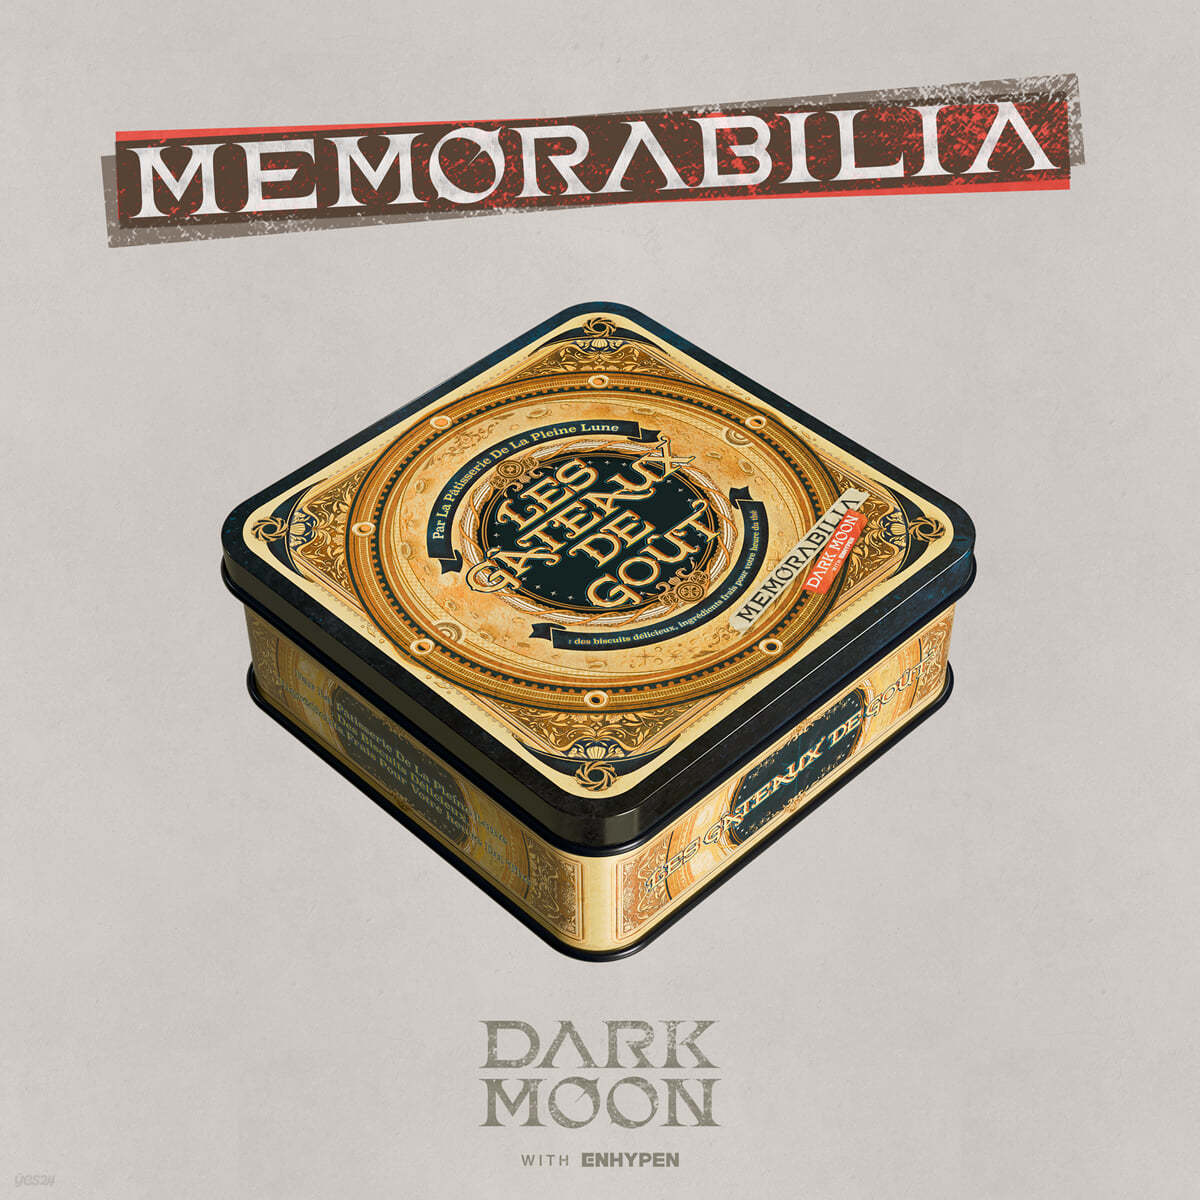 ENHYPEN – DARK MOON SPECIAL ALBUM [MEMORABILIA] (Moon Ver.) + KKANG Gift